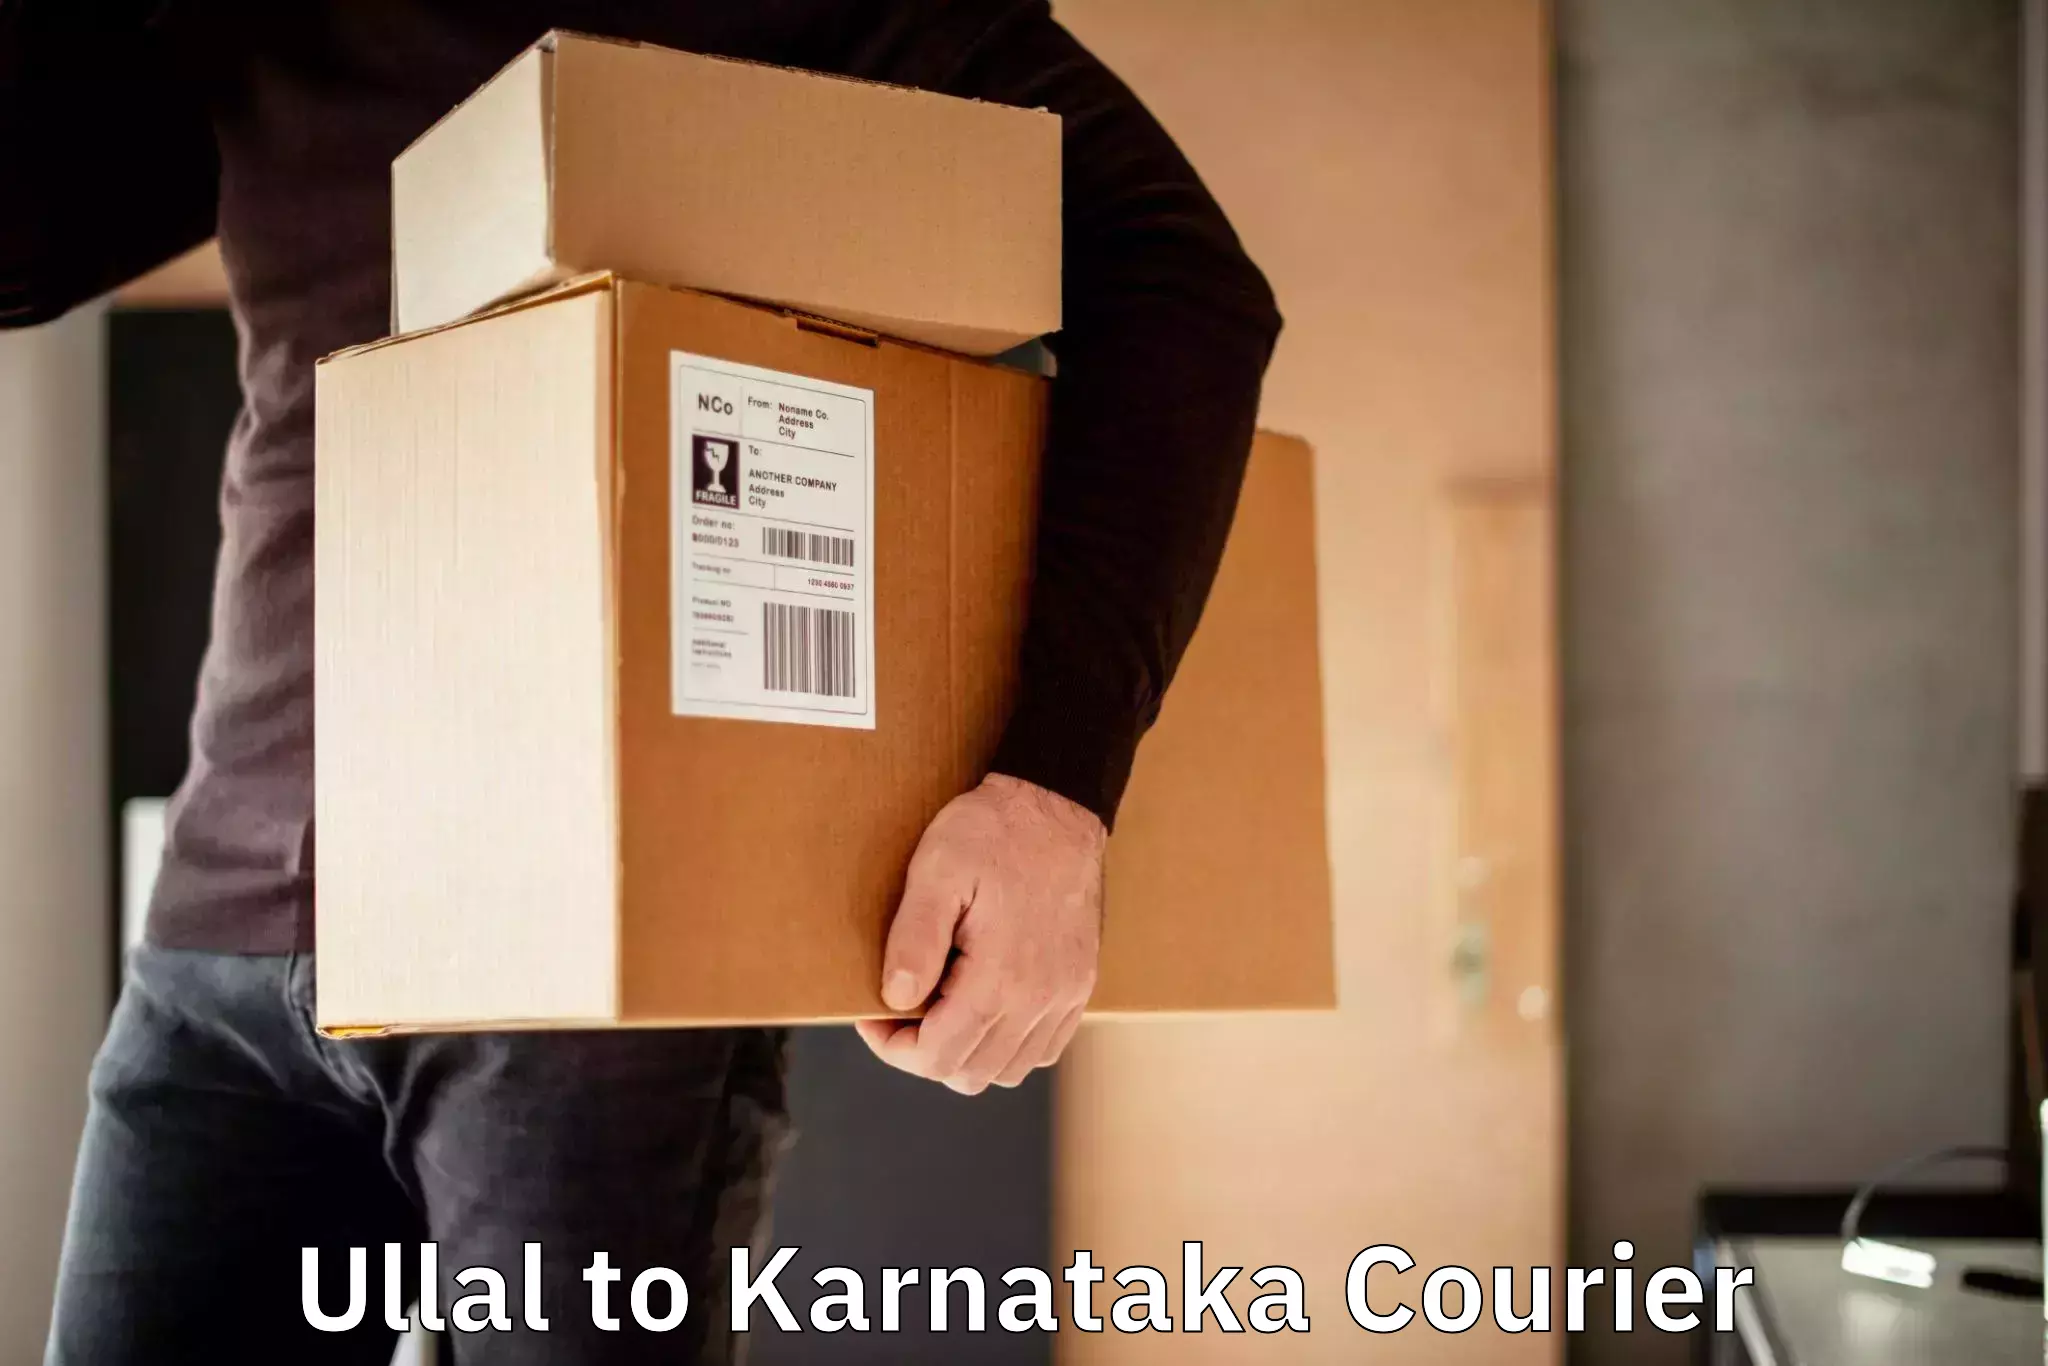 International parcel service Ullal to Karnataka